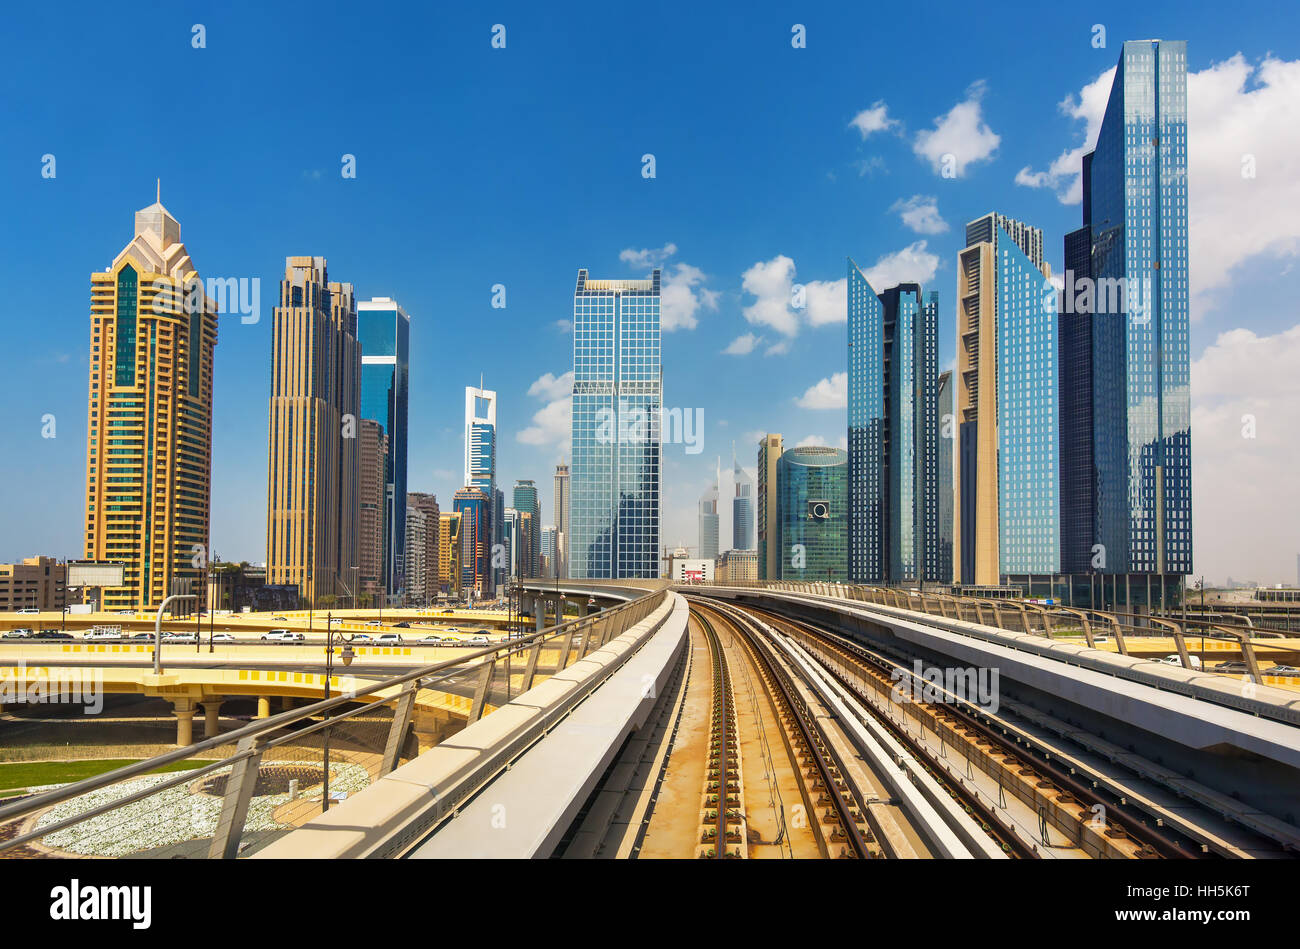 Modern skyscrapers and the Dubai Metro - driverless, fully automated metro rail network,Dubai,United Arab Emirates Stock Photo